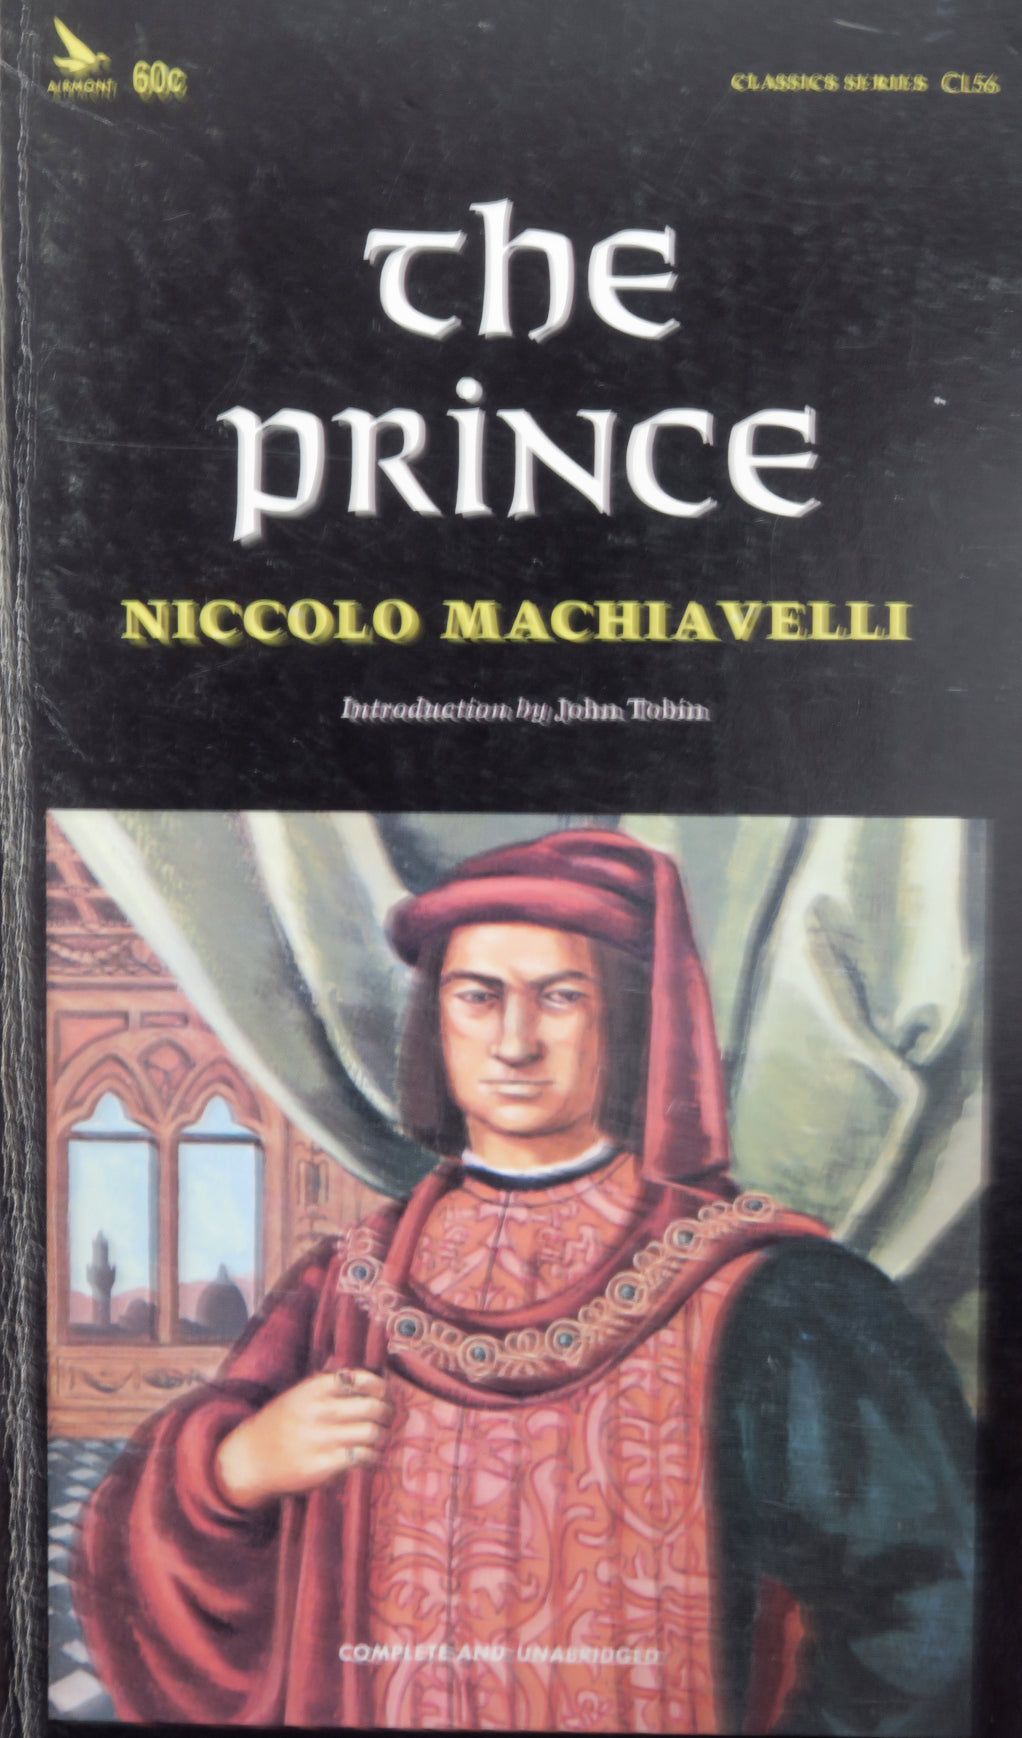 niccolo machiavelli short biography